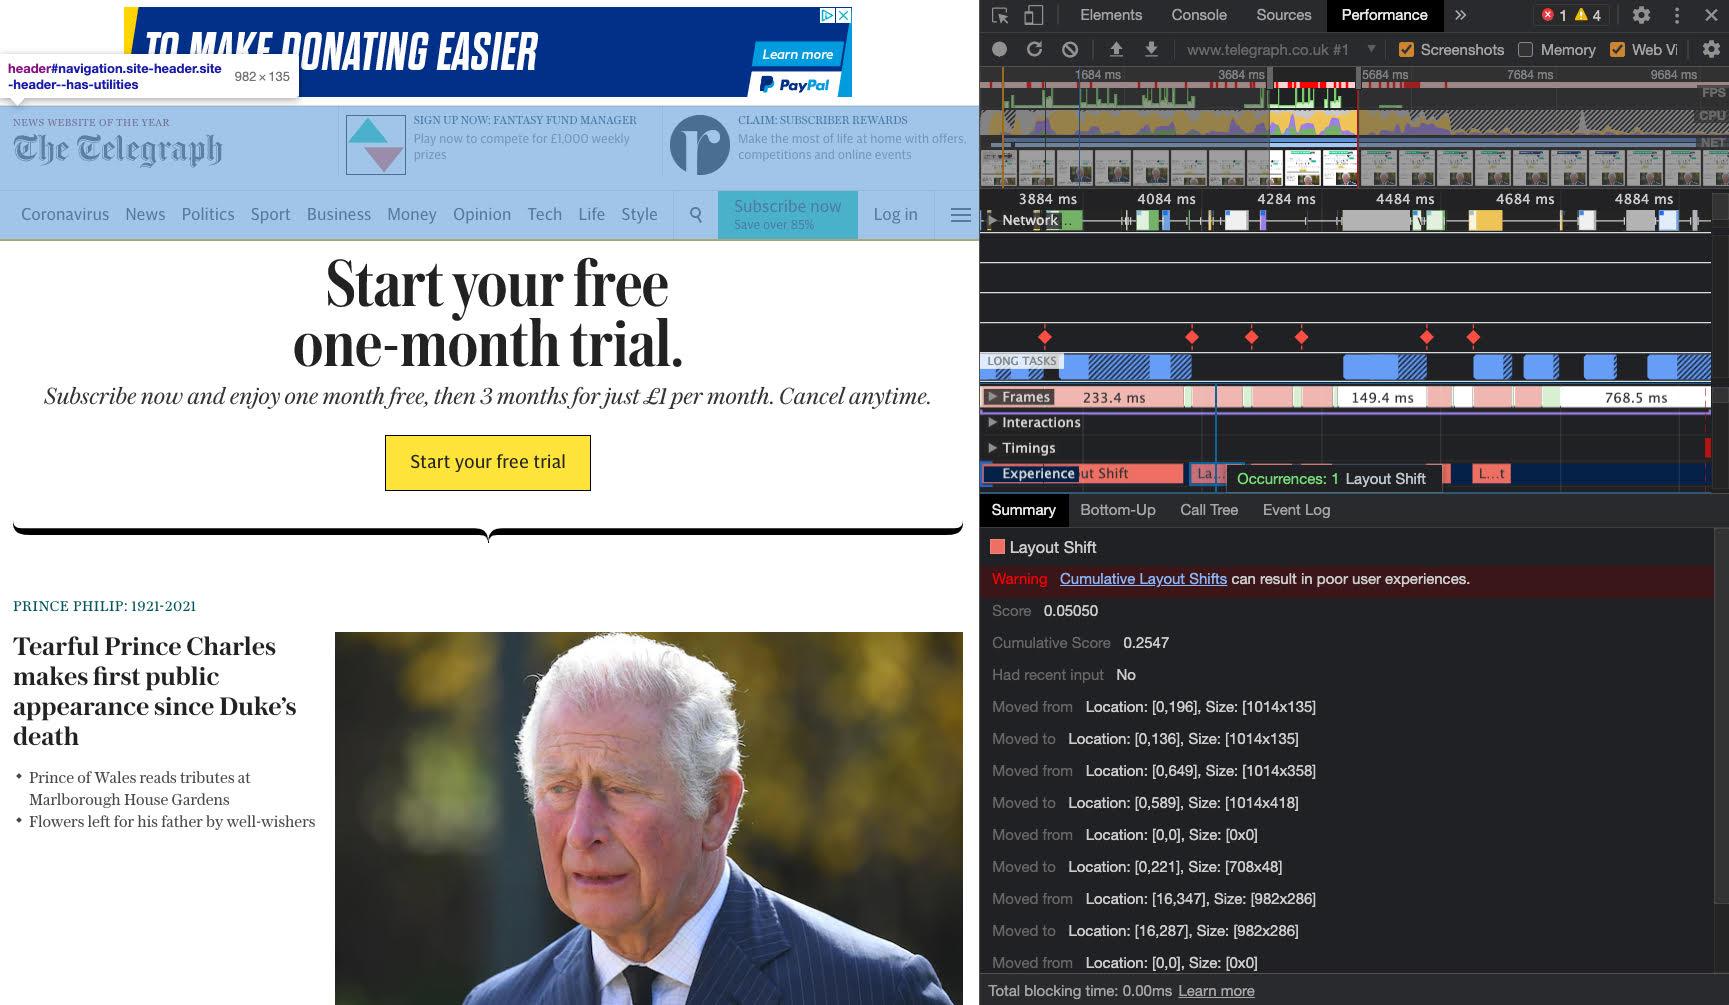 Telegraph 的首頁，標題旁有藍色重疊的廣告。